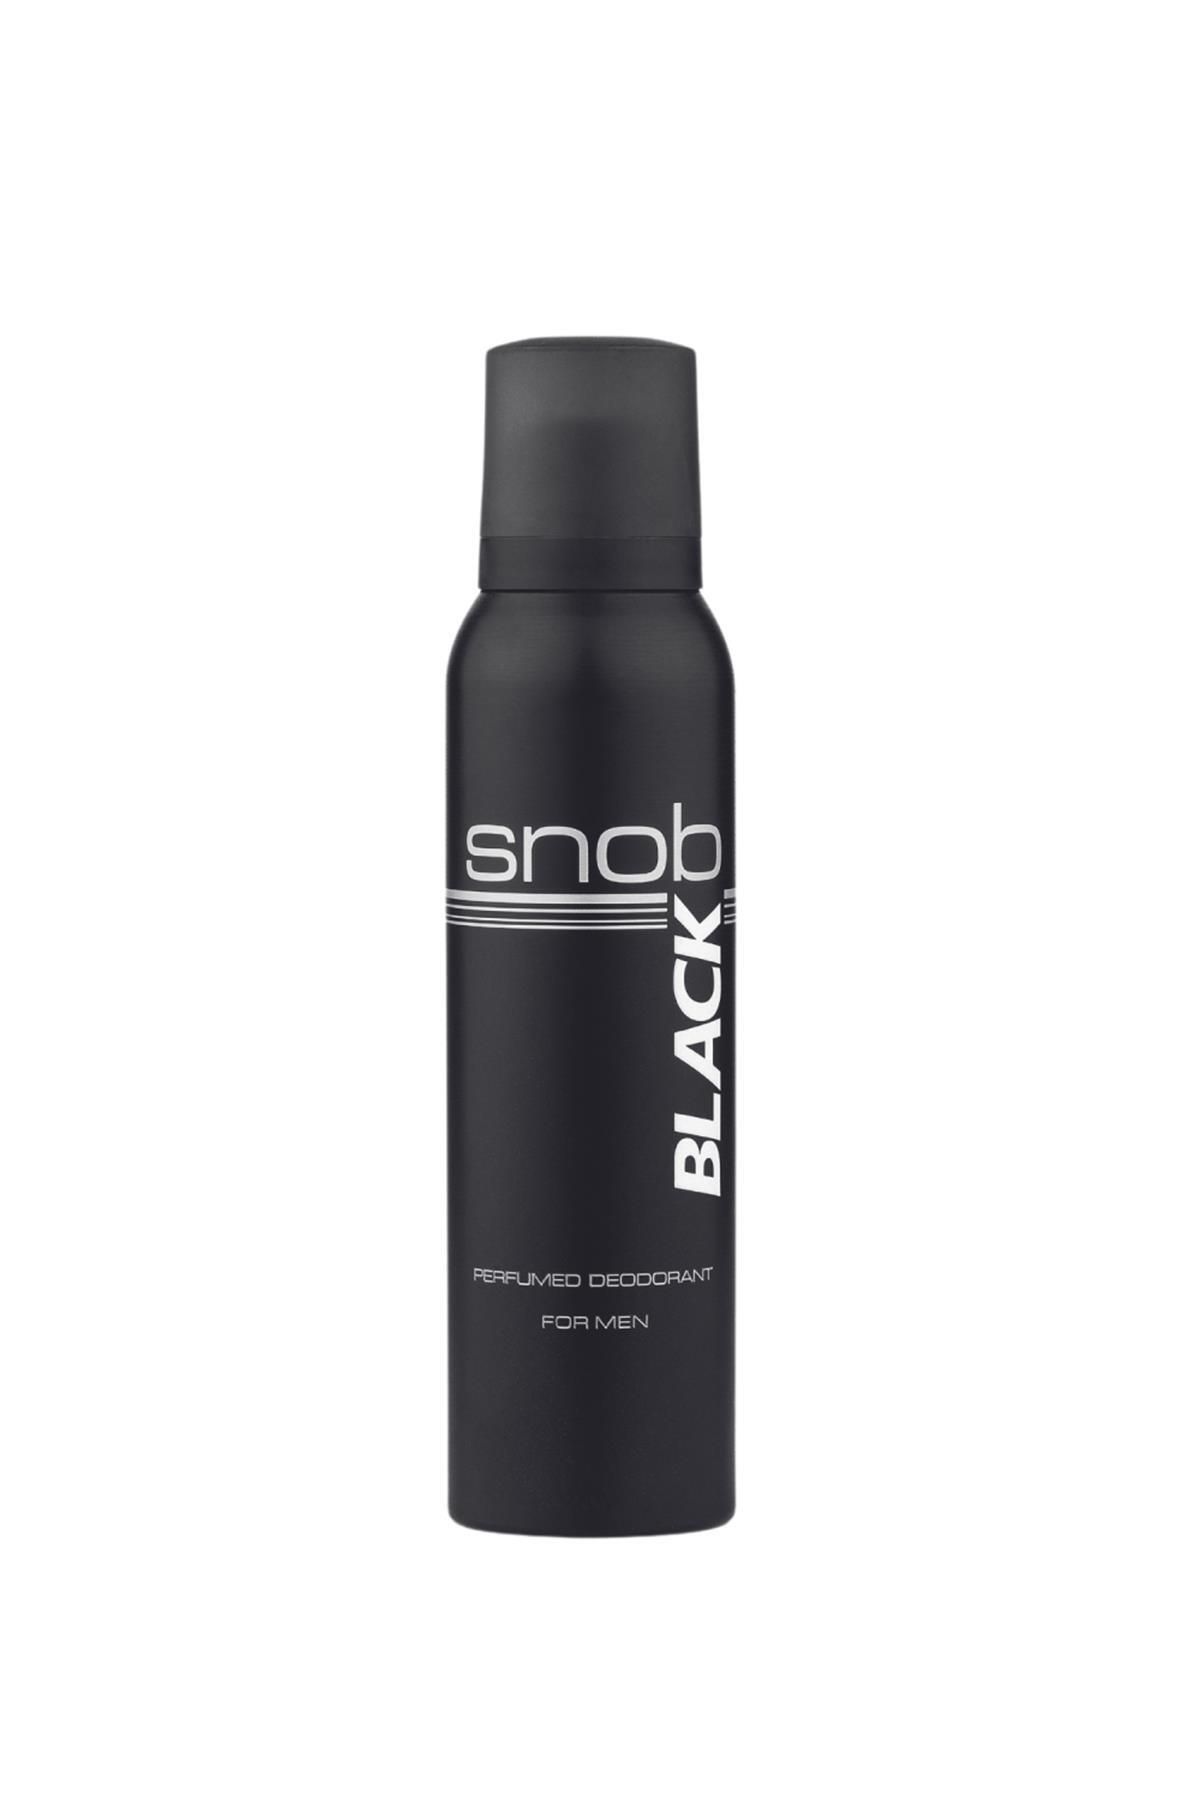 Snob Black Erkek Deodorant 150 ml